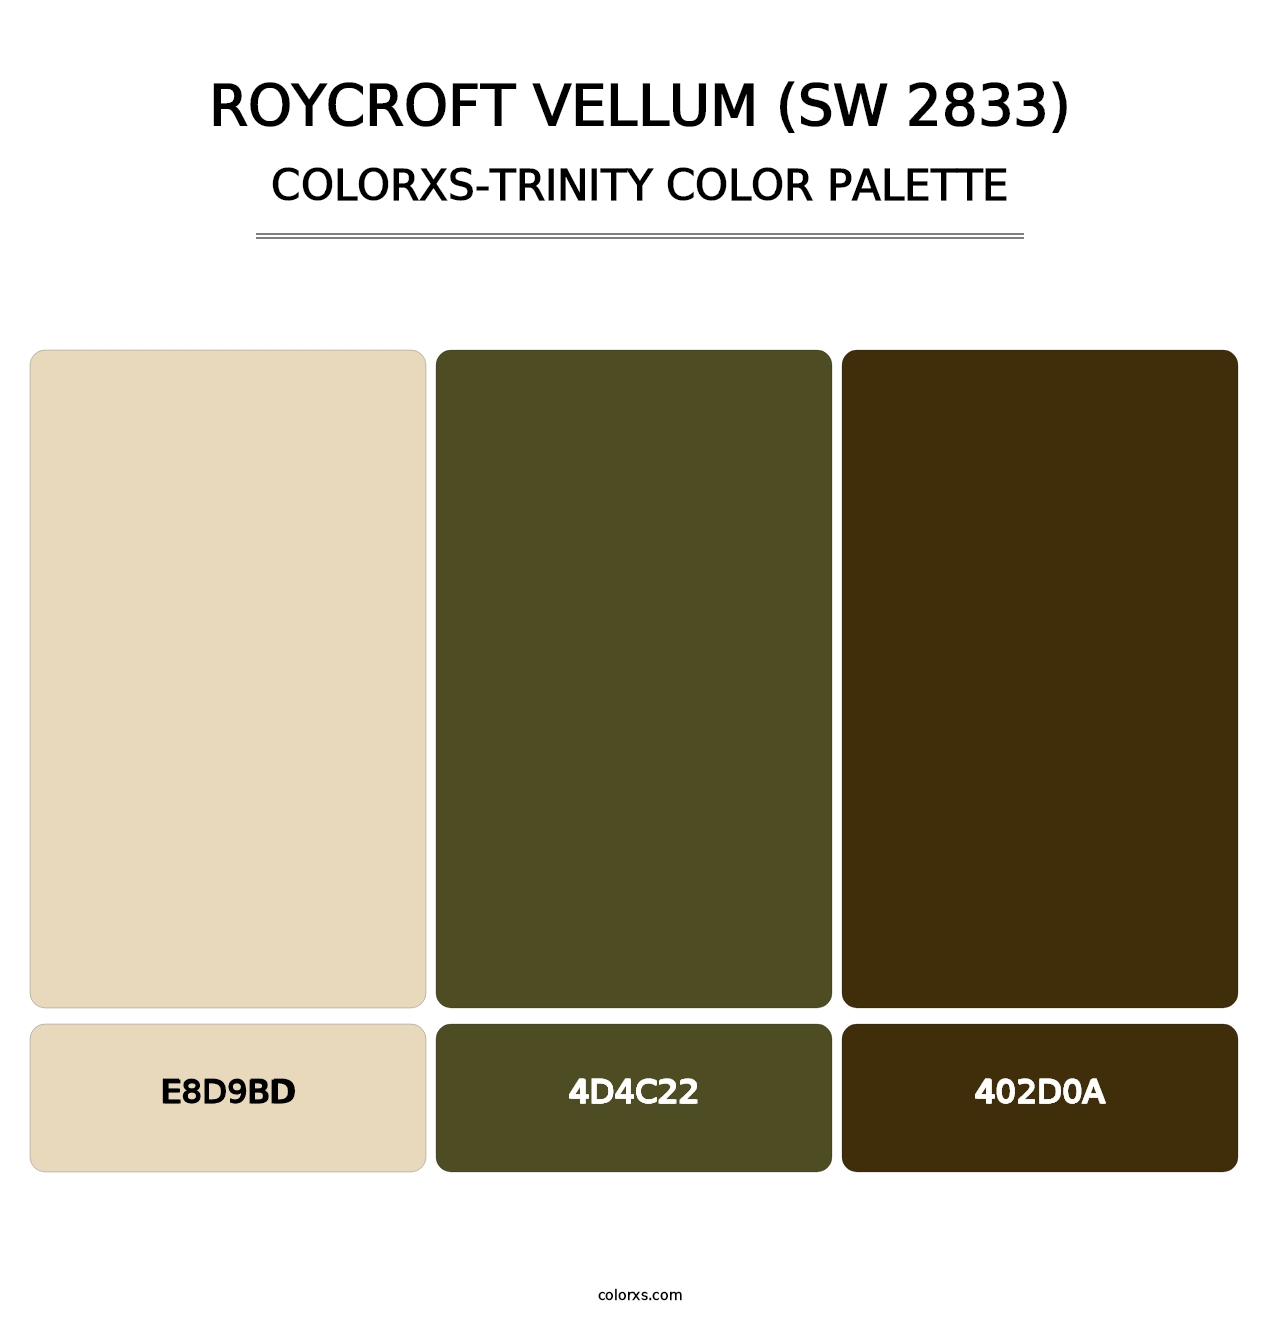 Roycroft Vellum (SW 2833) - Colorxs Trinity Palette